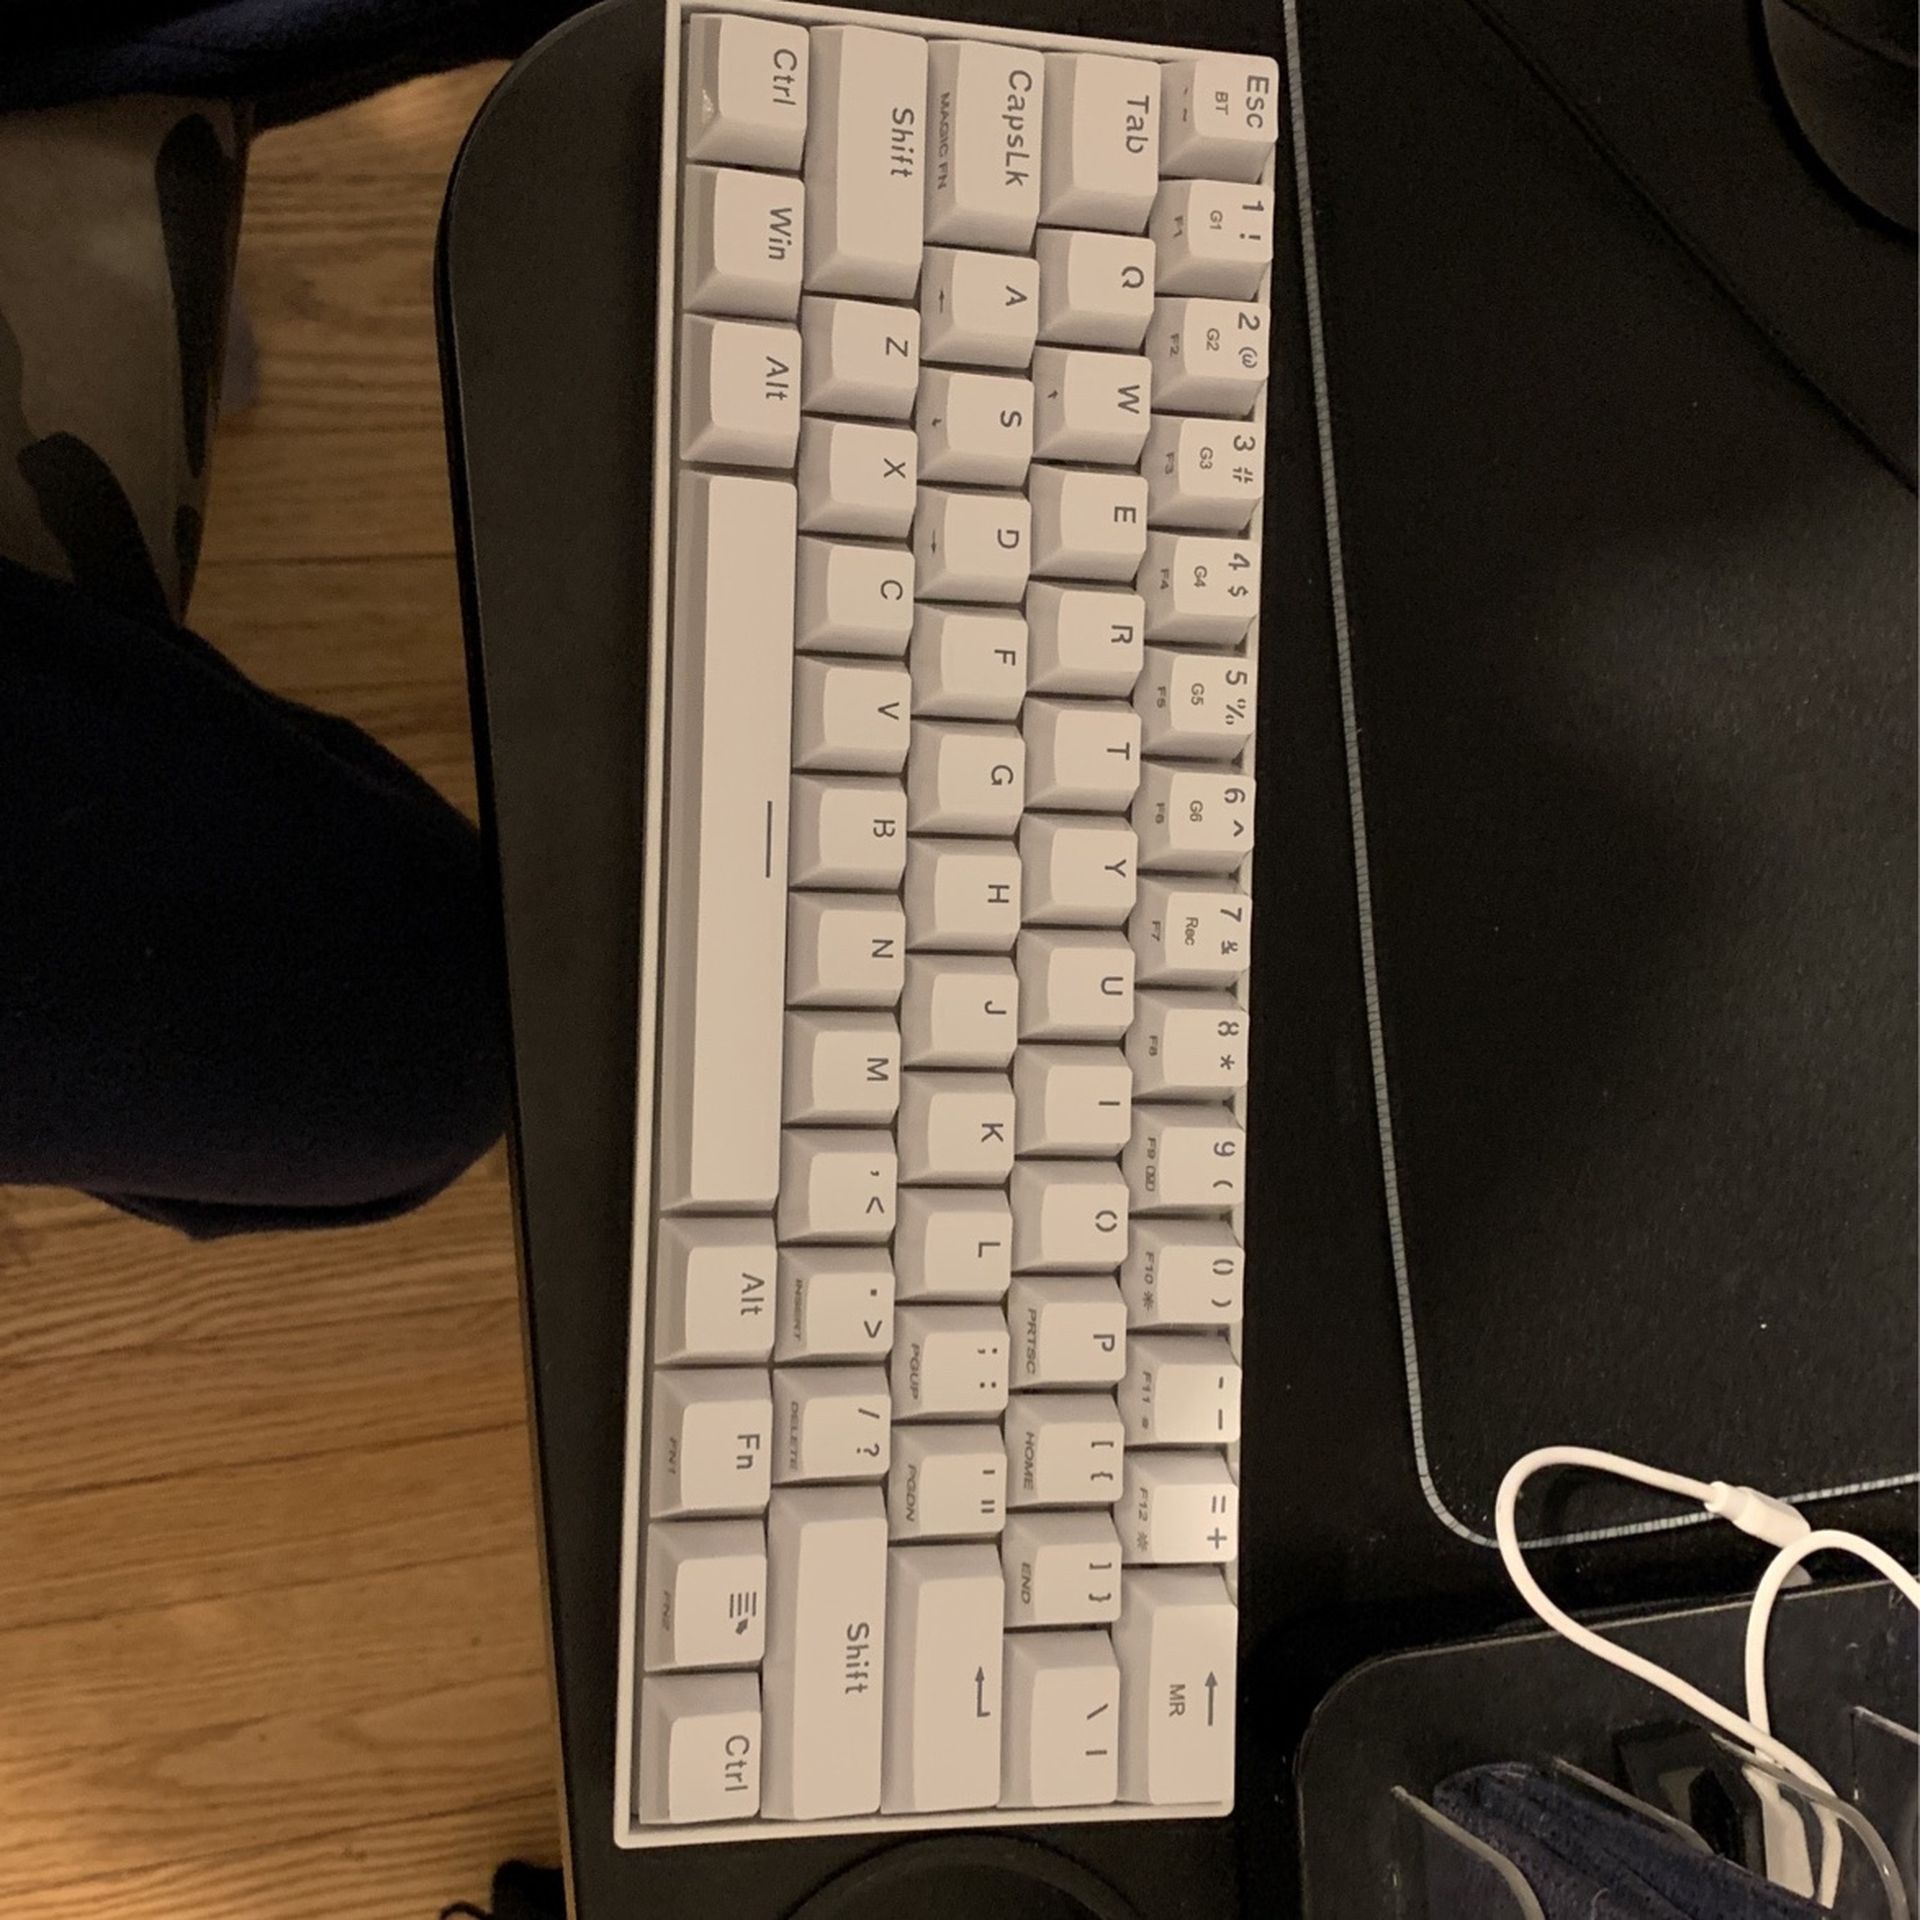 Draconic 60% Keyboard